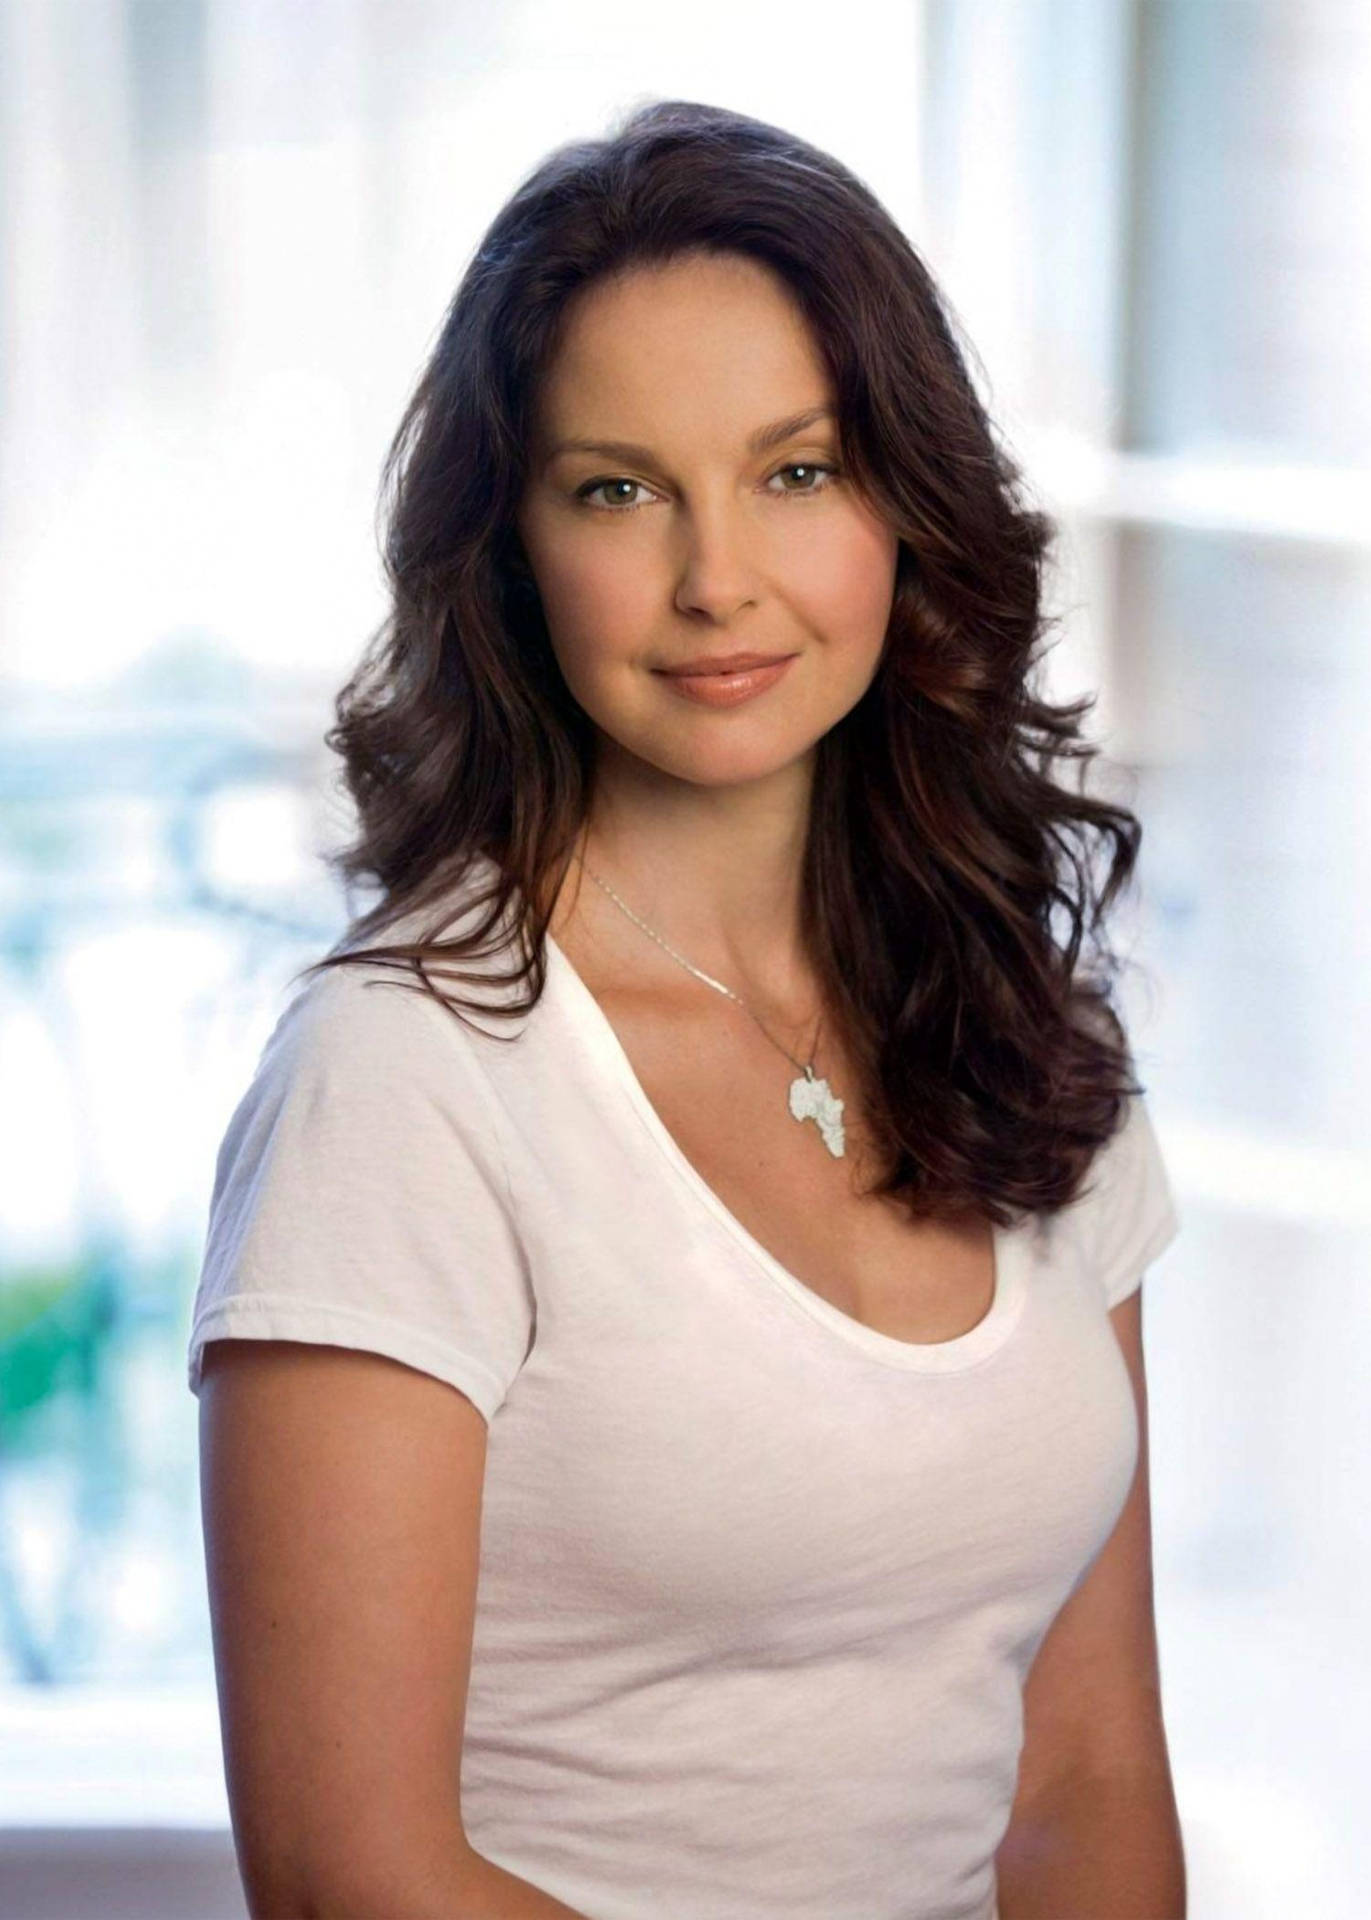 Ashley Judd Portrait Wallpaper